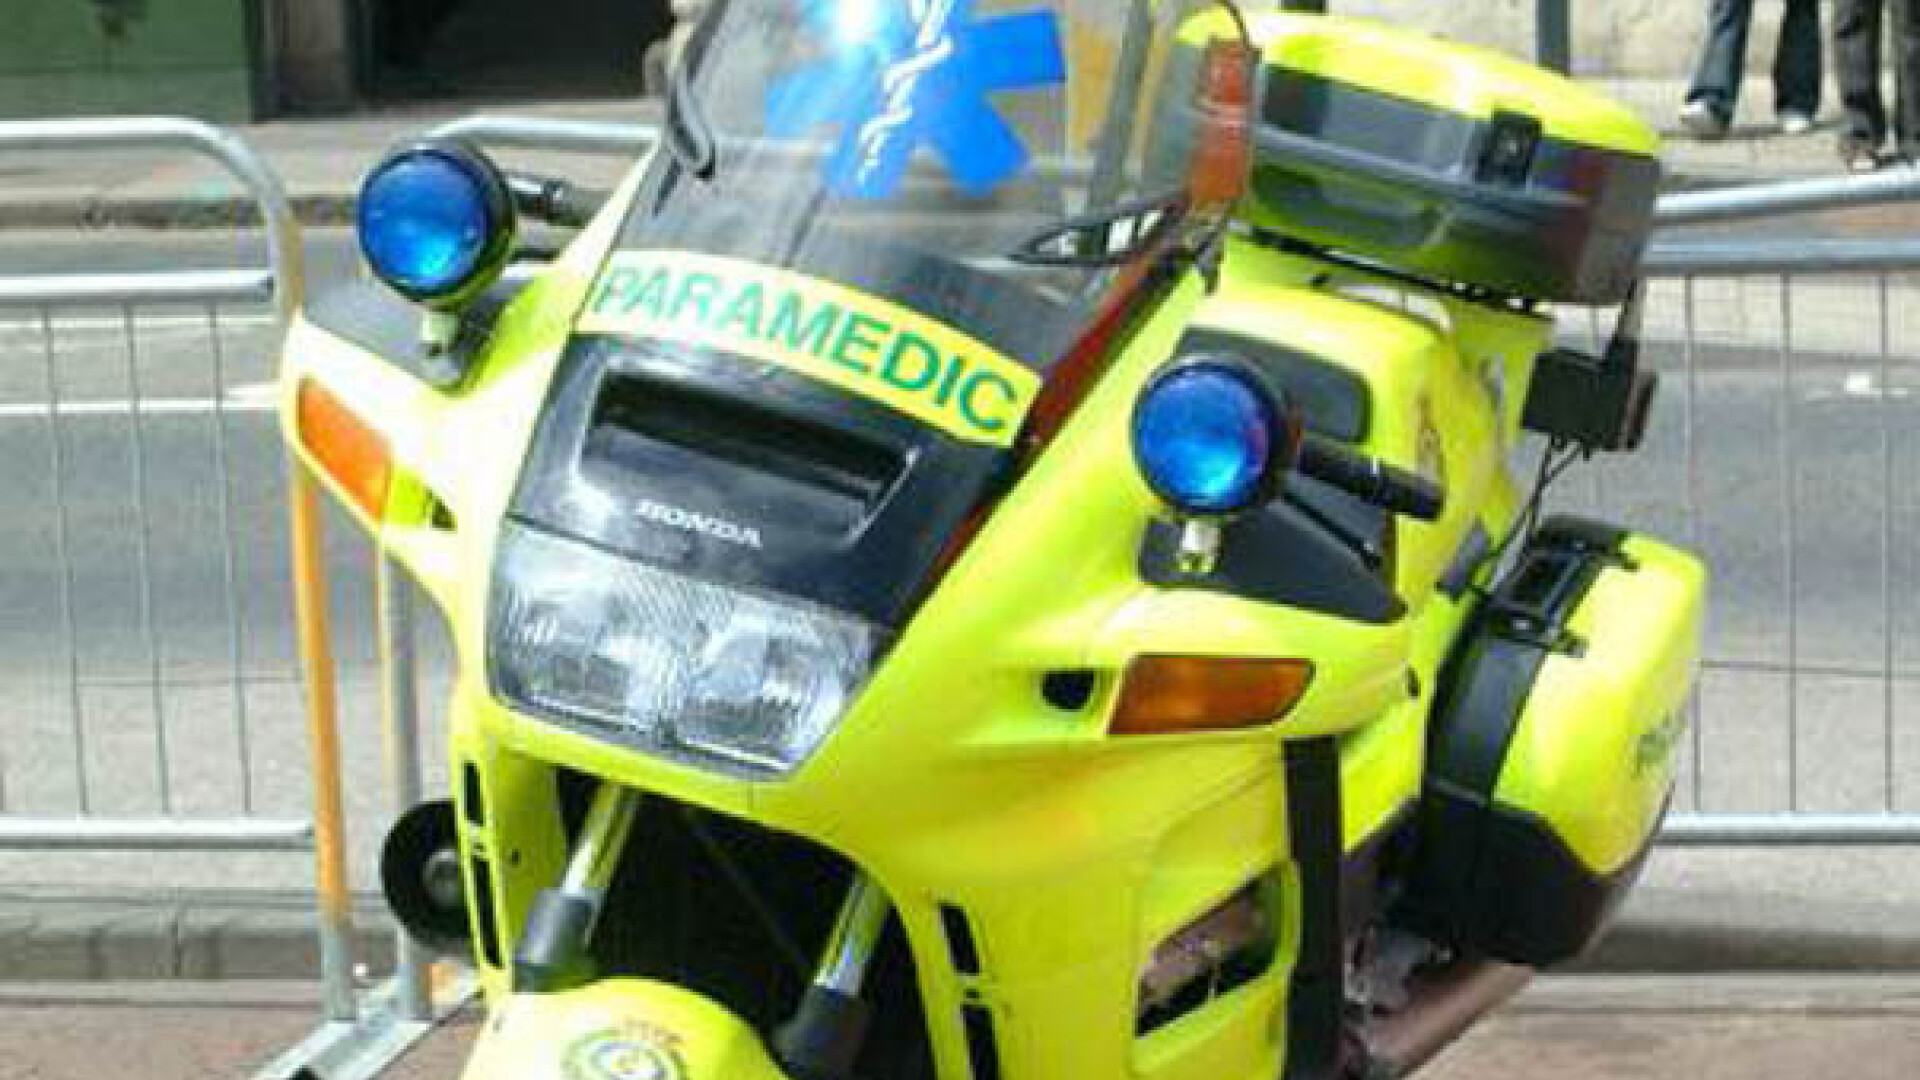 Motocicleta paramedic